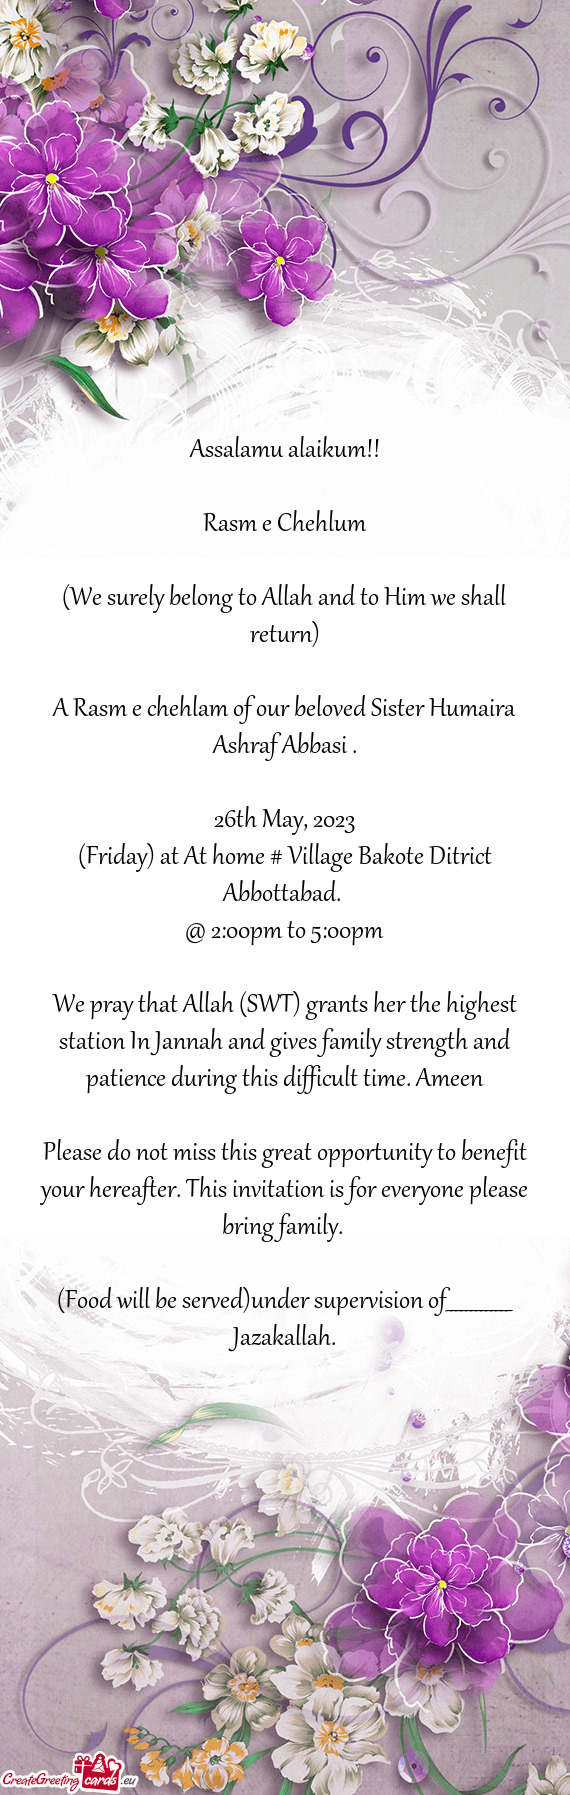 A Rasm e chehlam of our beloved Sister Humaira Ashraf Abbasi